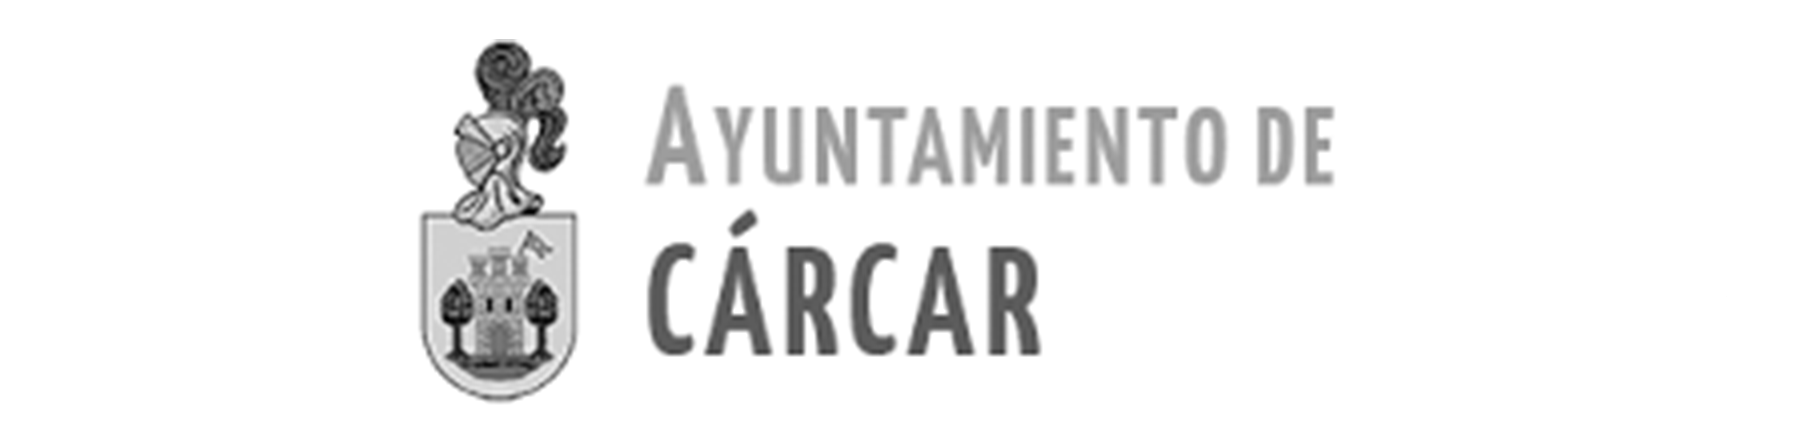 carcar_web